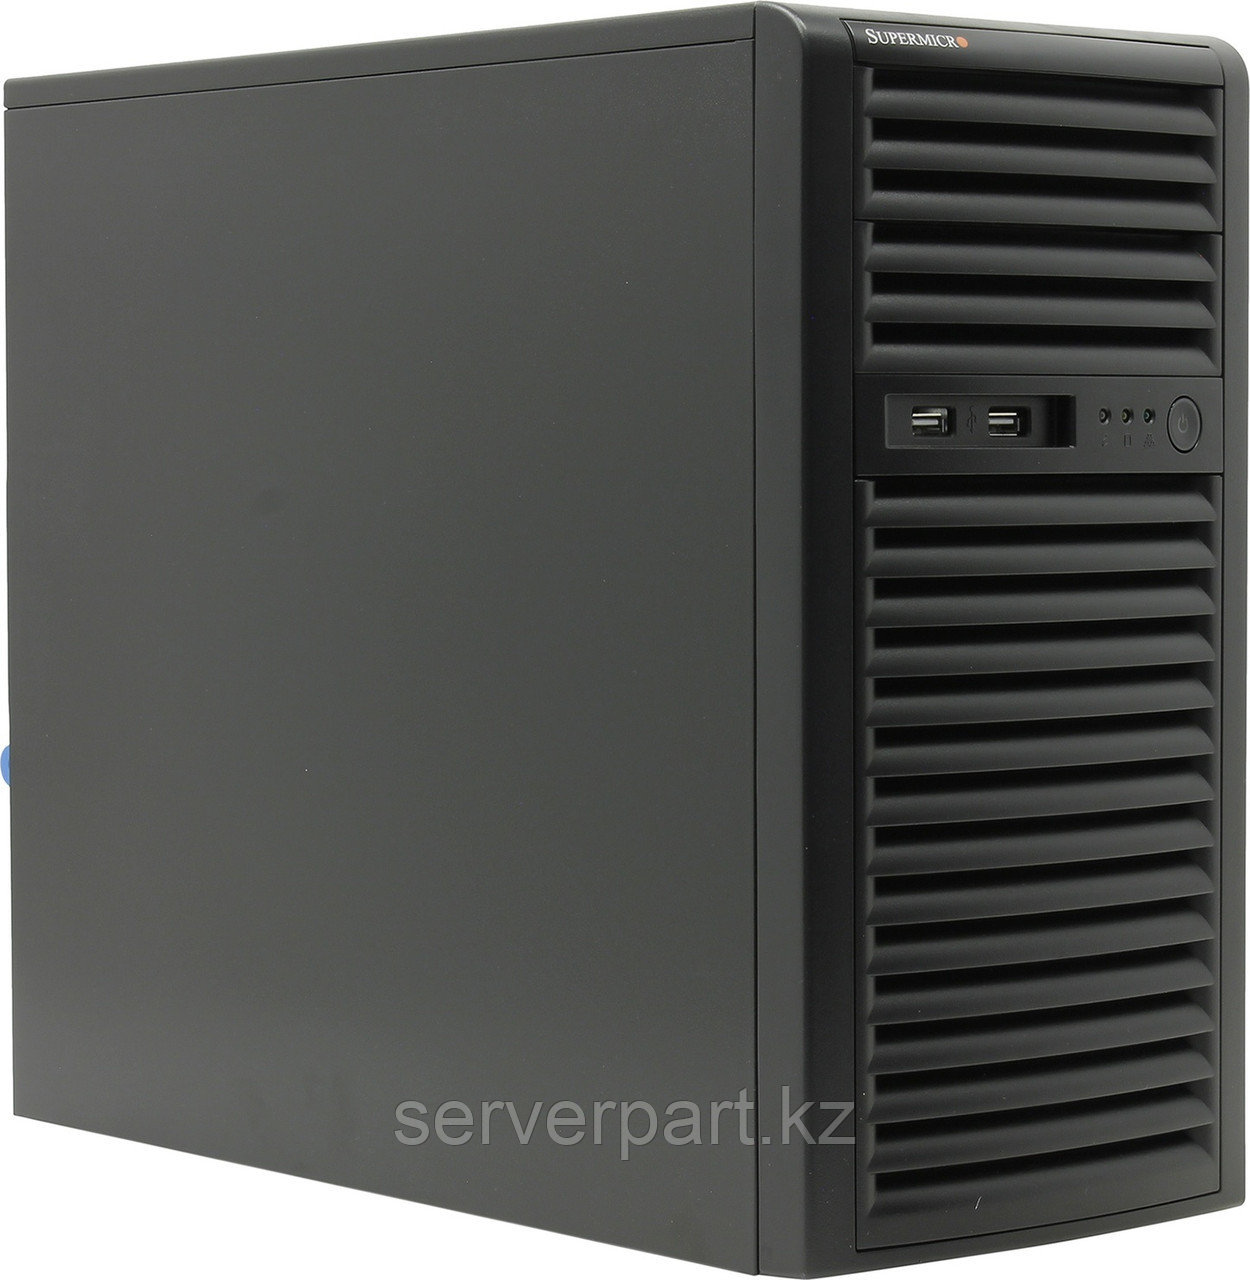 Сервер Supermicro SYS-5039C Tower 4LFF/4-core intel xeon E2124 3.3GHz/32GB UDIMM nECC/1x240GB SSD MU Hyb, фото 1